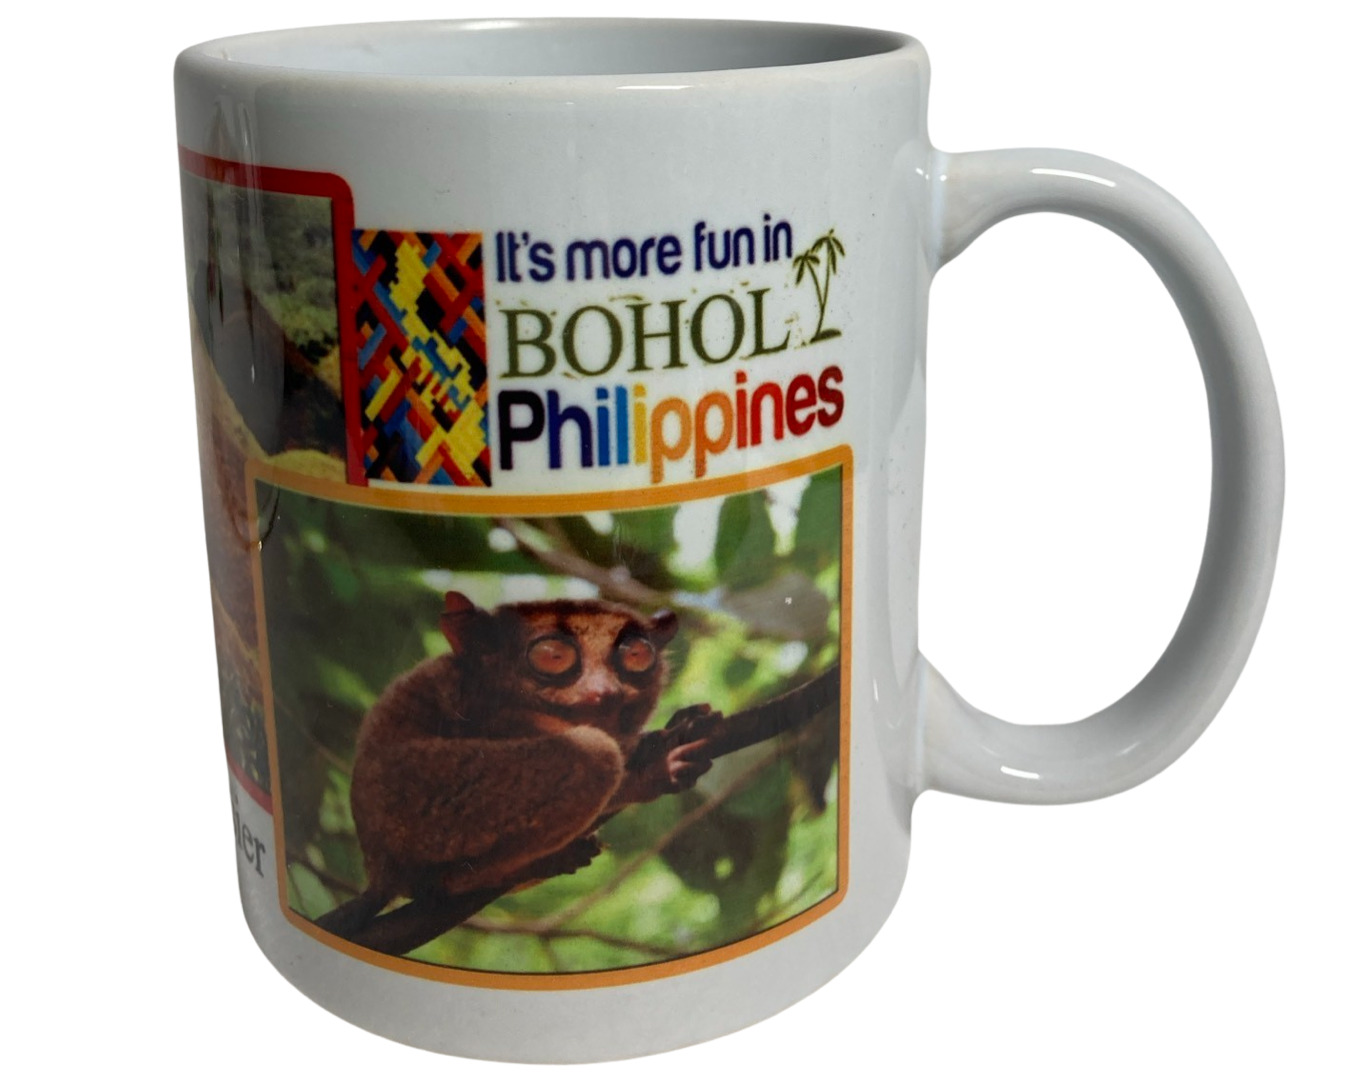 Bohol. Philippines Coffee Mug